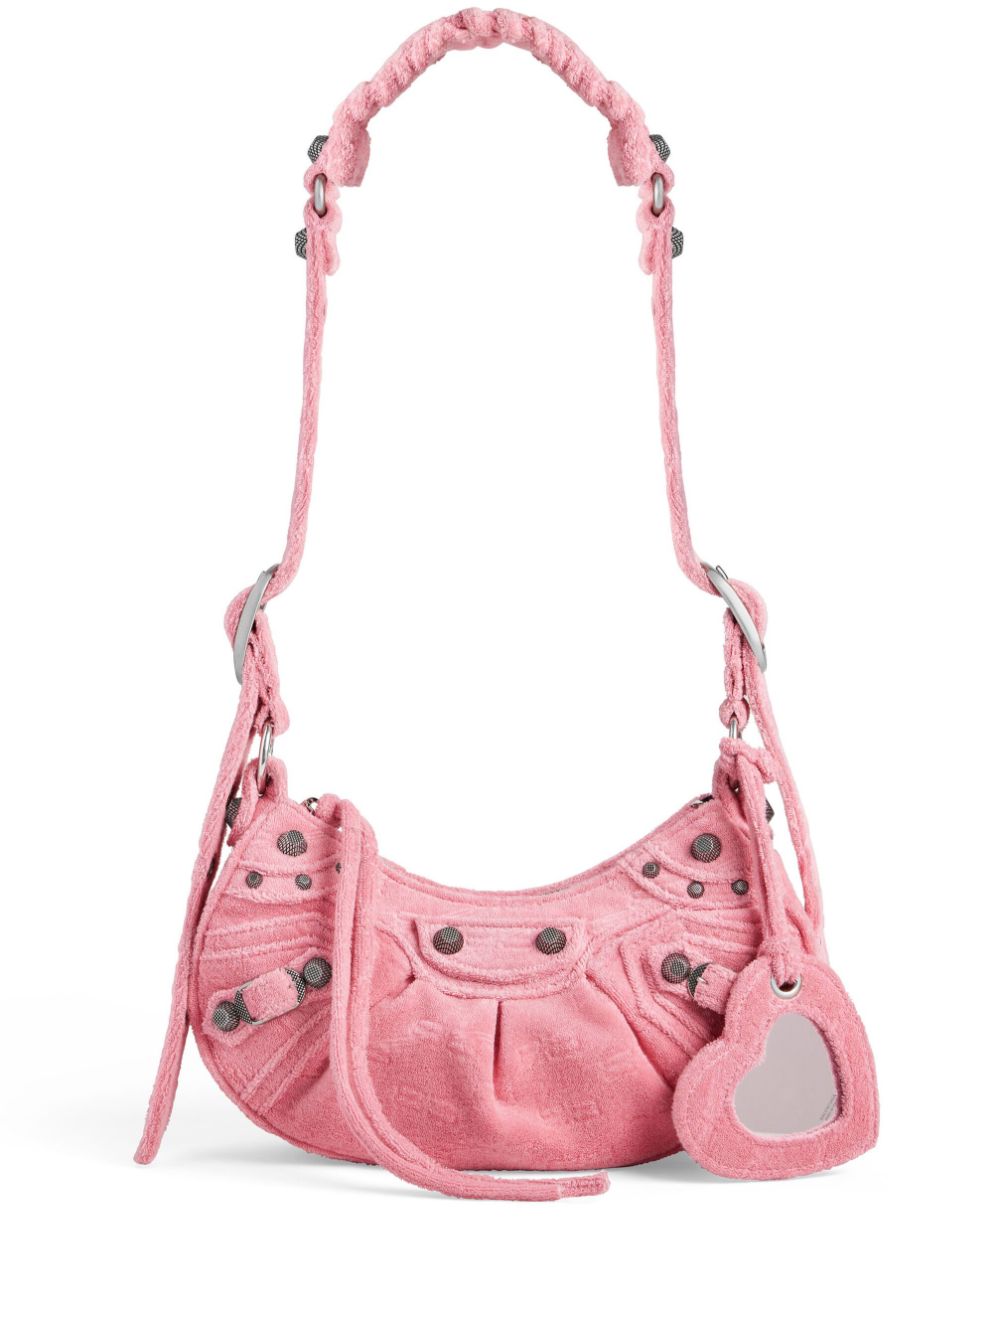 Flamingo Pink Mini Shoulder Handbag with Decorative Details